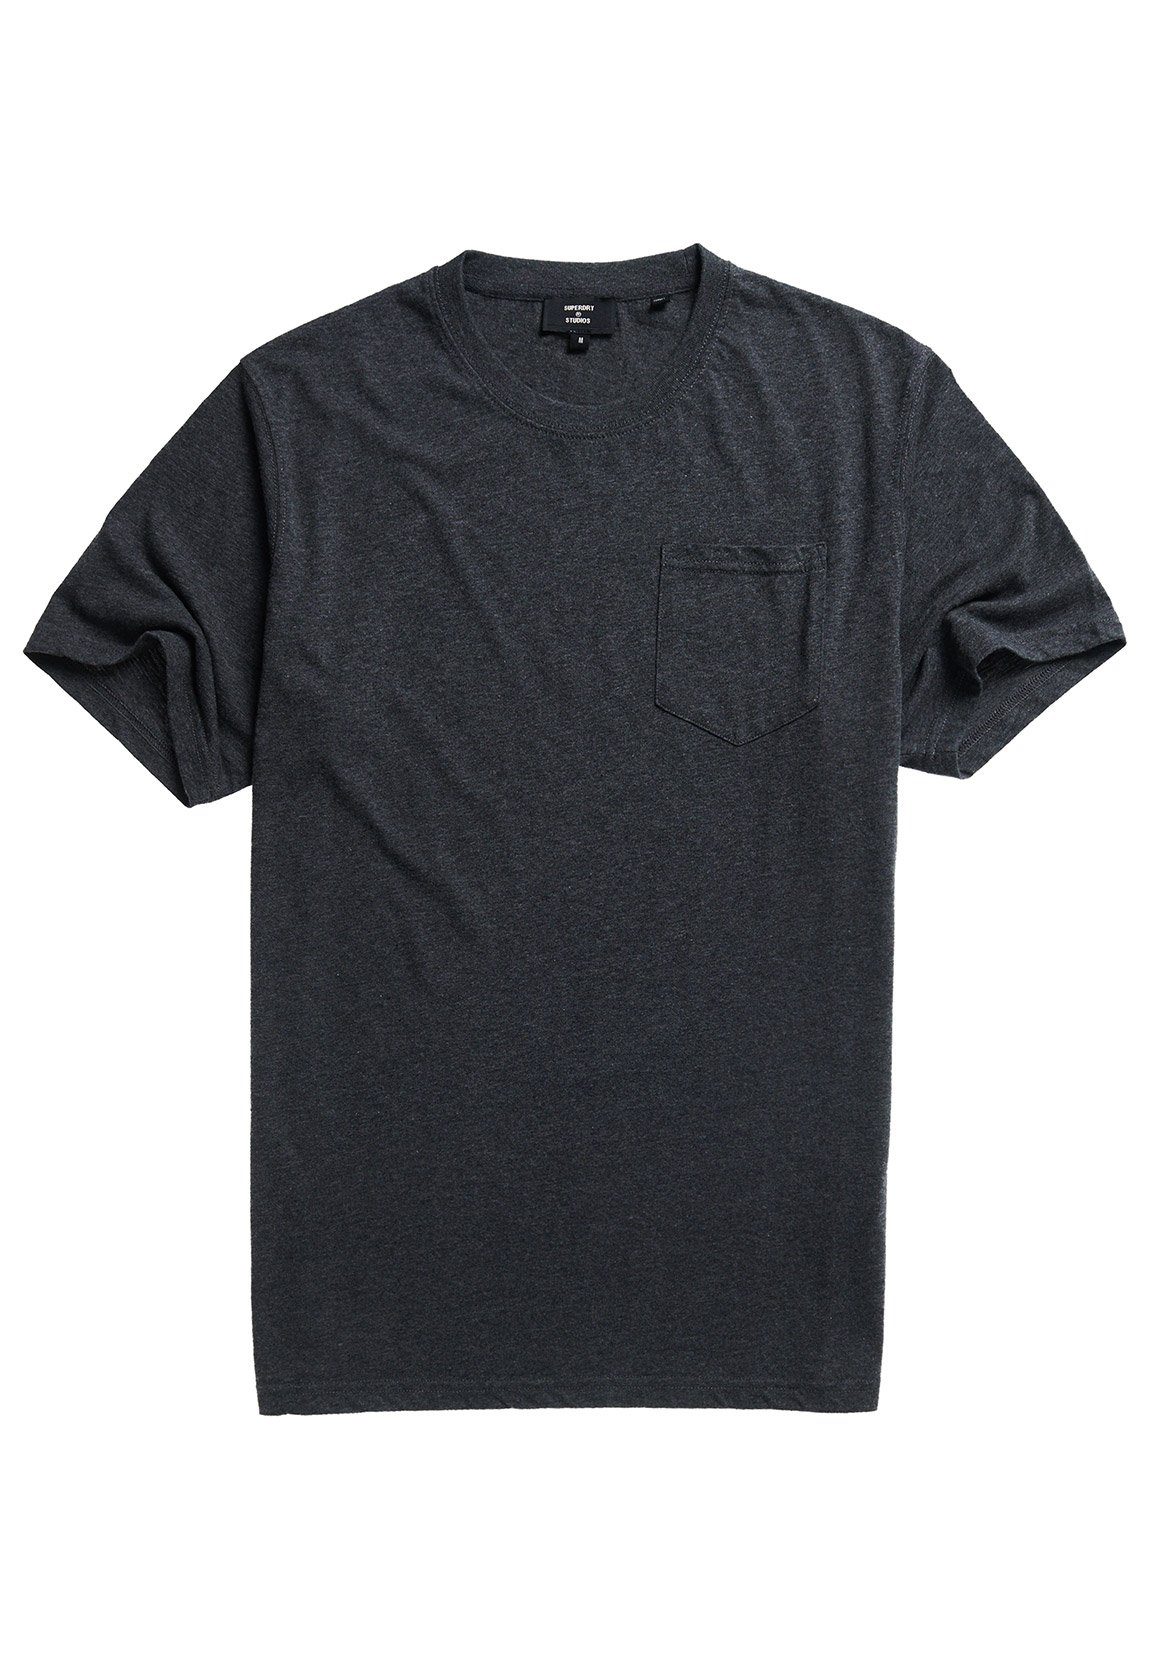 COTTON Charcoal AUTHENTIC TEE Marl Herren T-Shirt Superdry Superdry T-Shirt Dunkelgrau